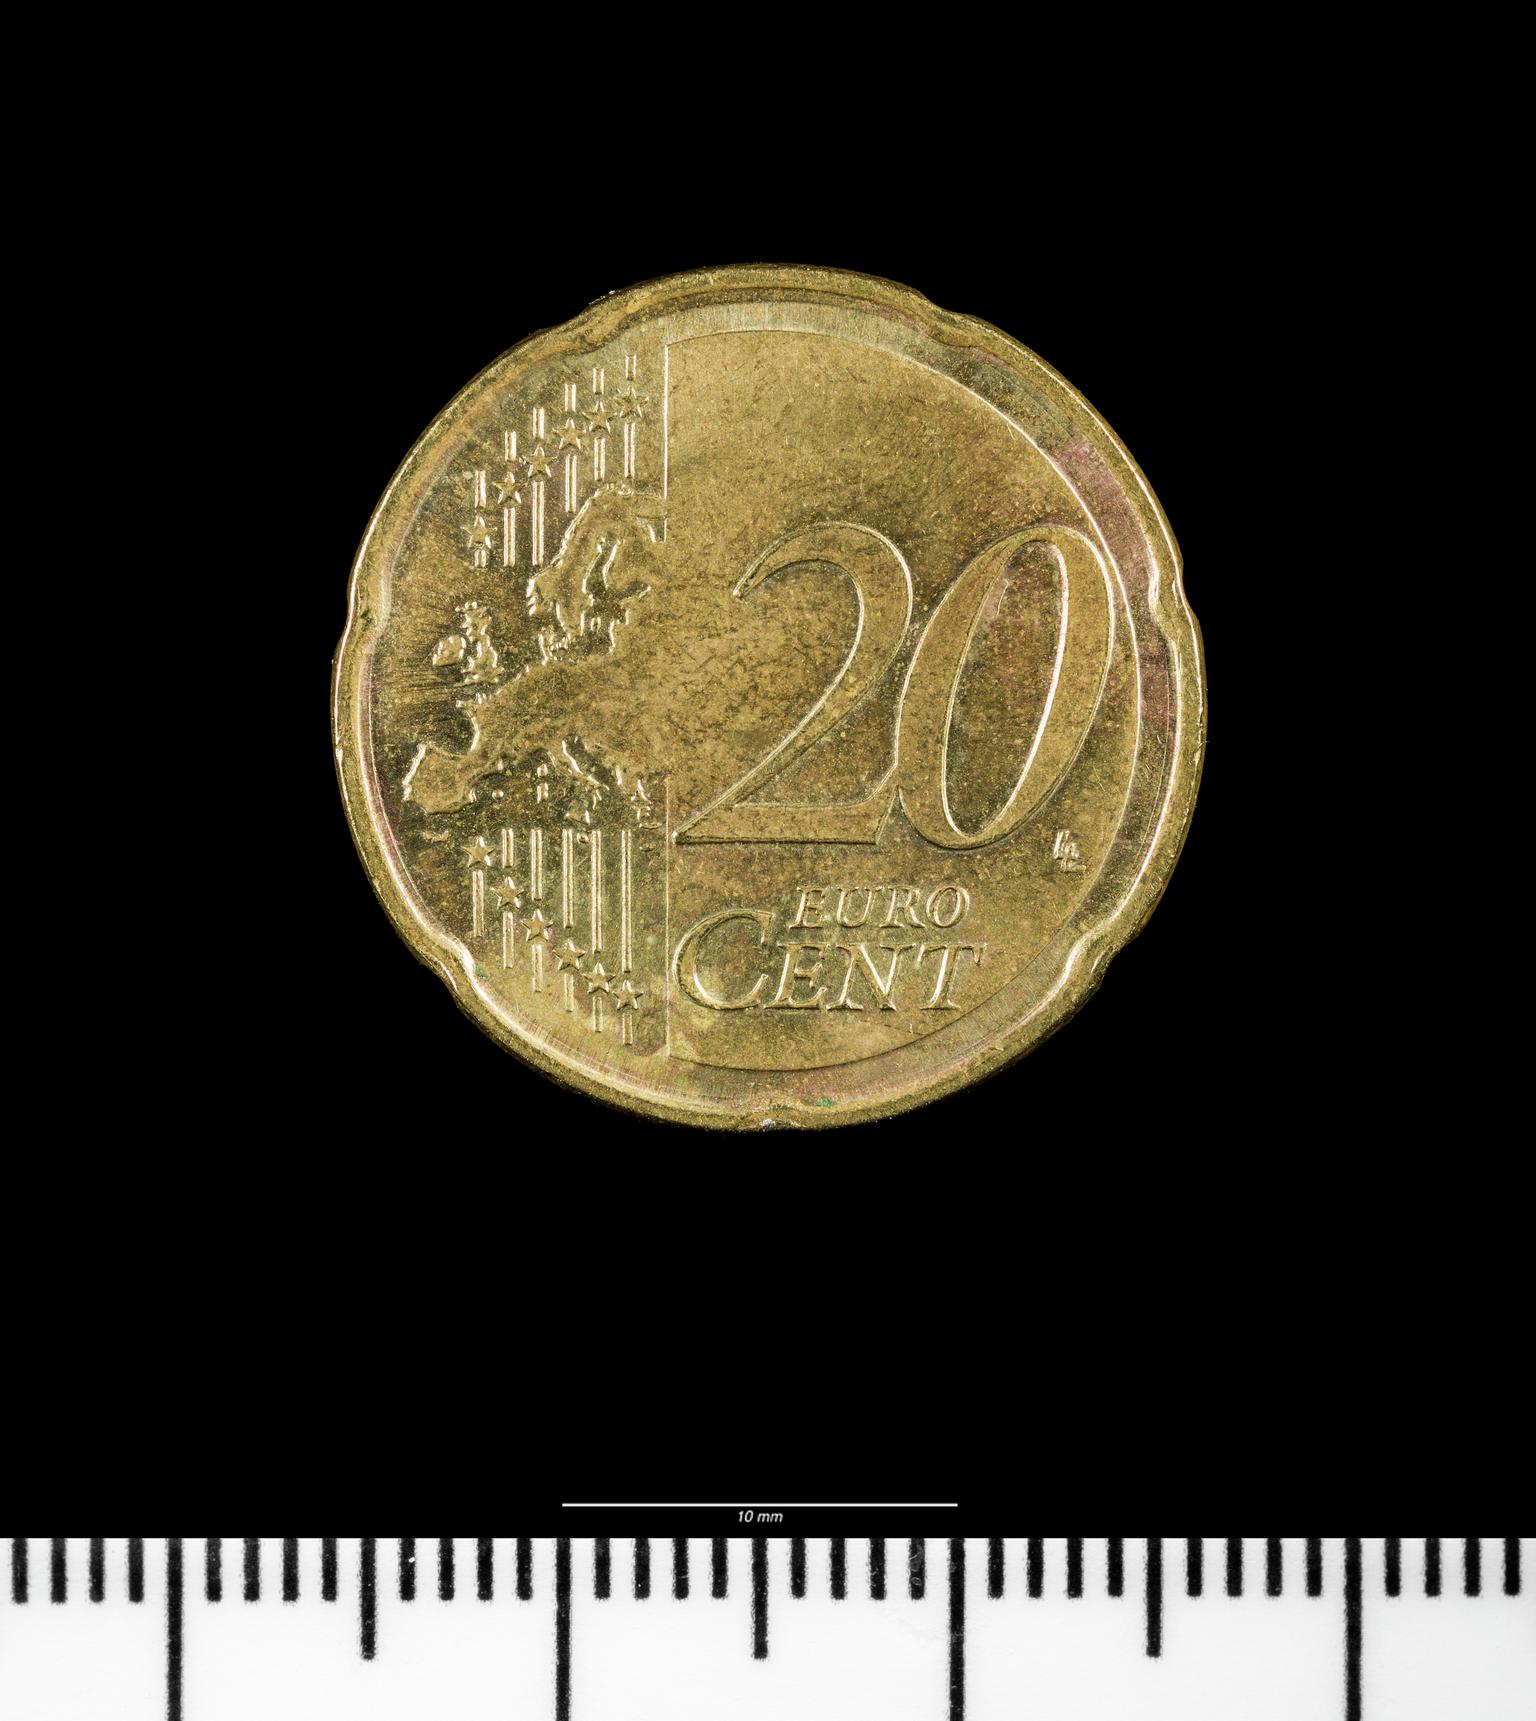 Malta (Republic) twenty euro cents